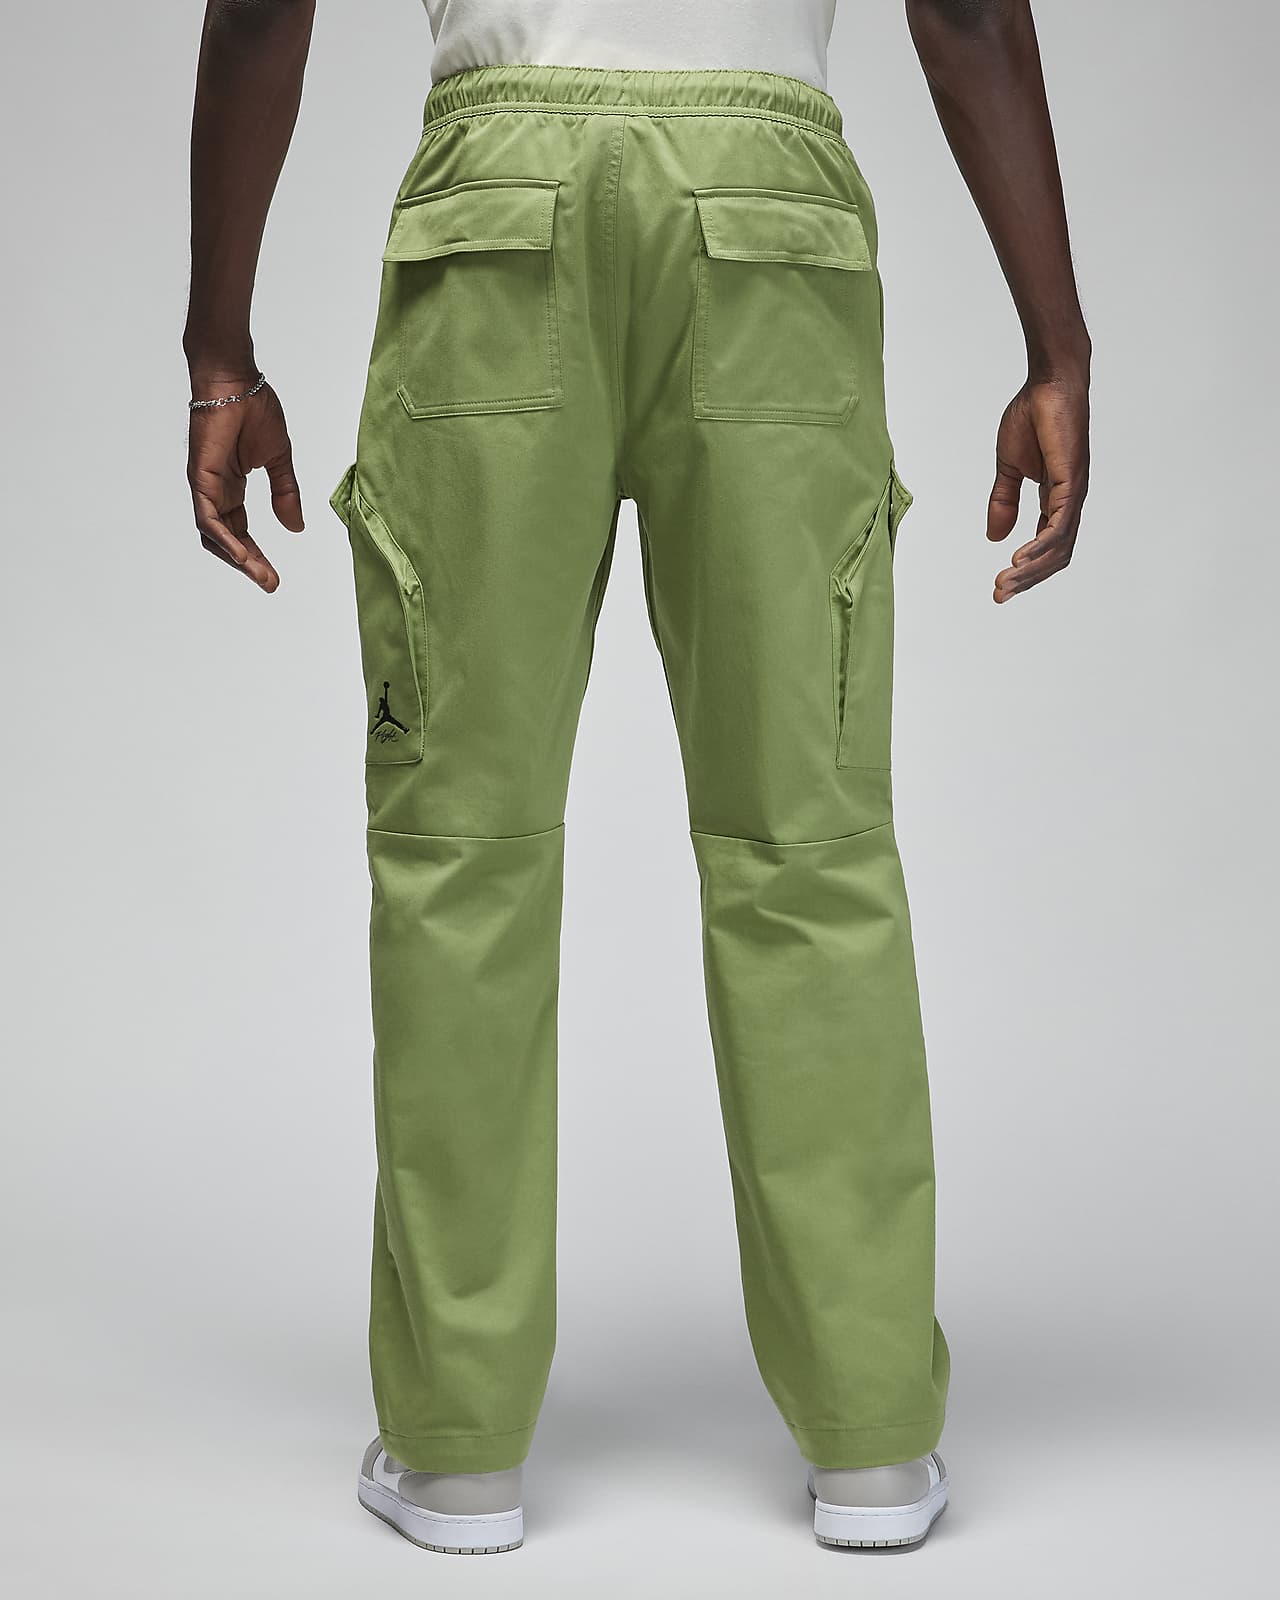 Essential Unisex Streetwear Cargo Pants